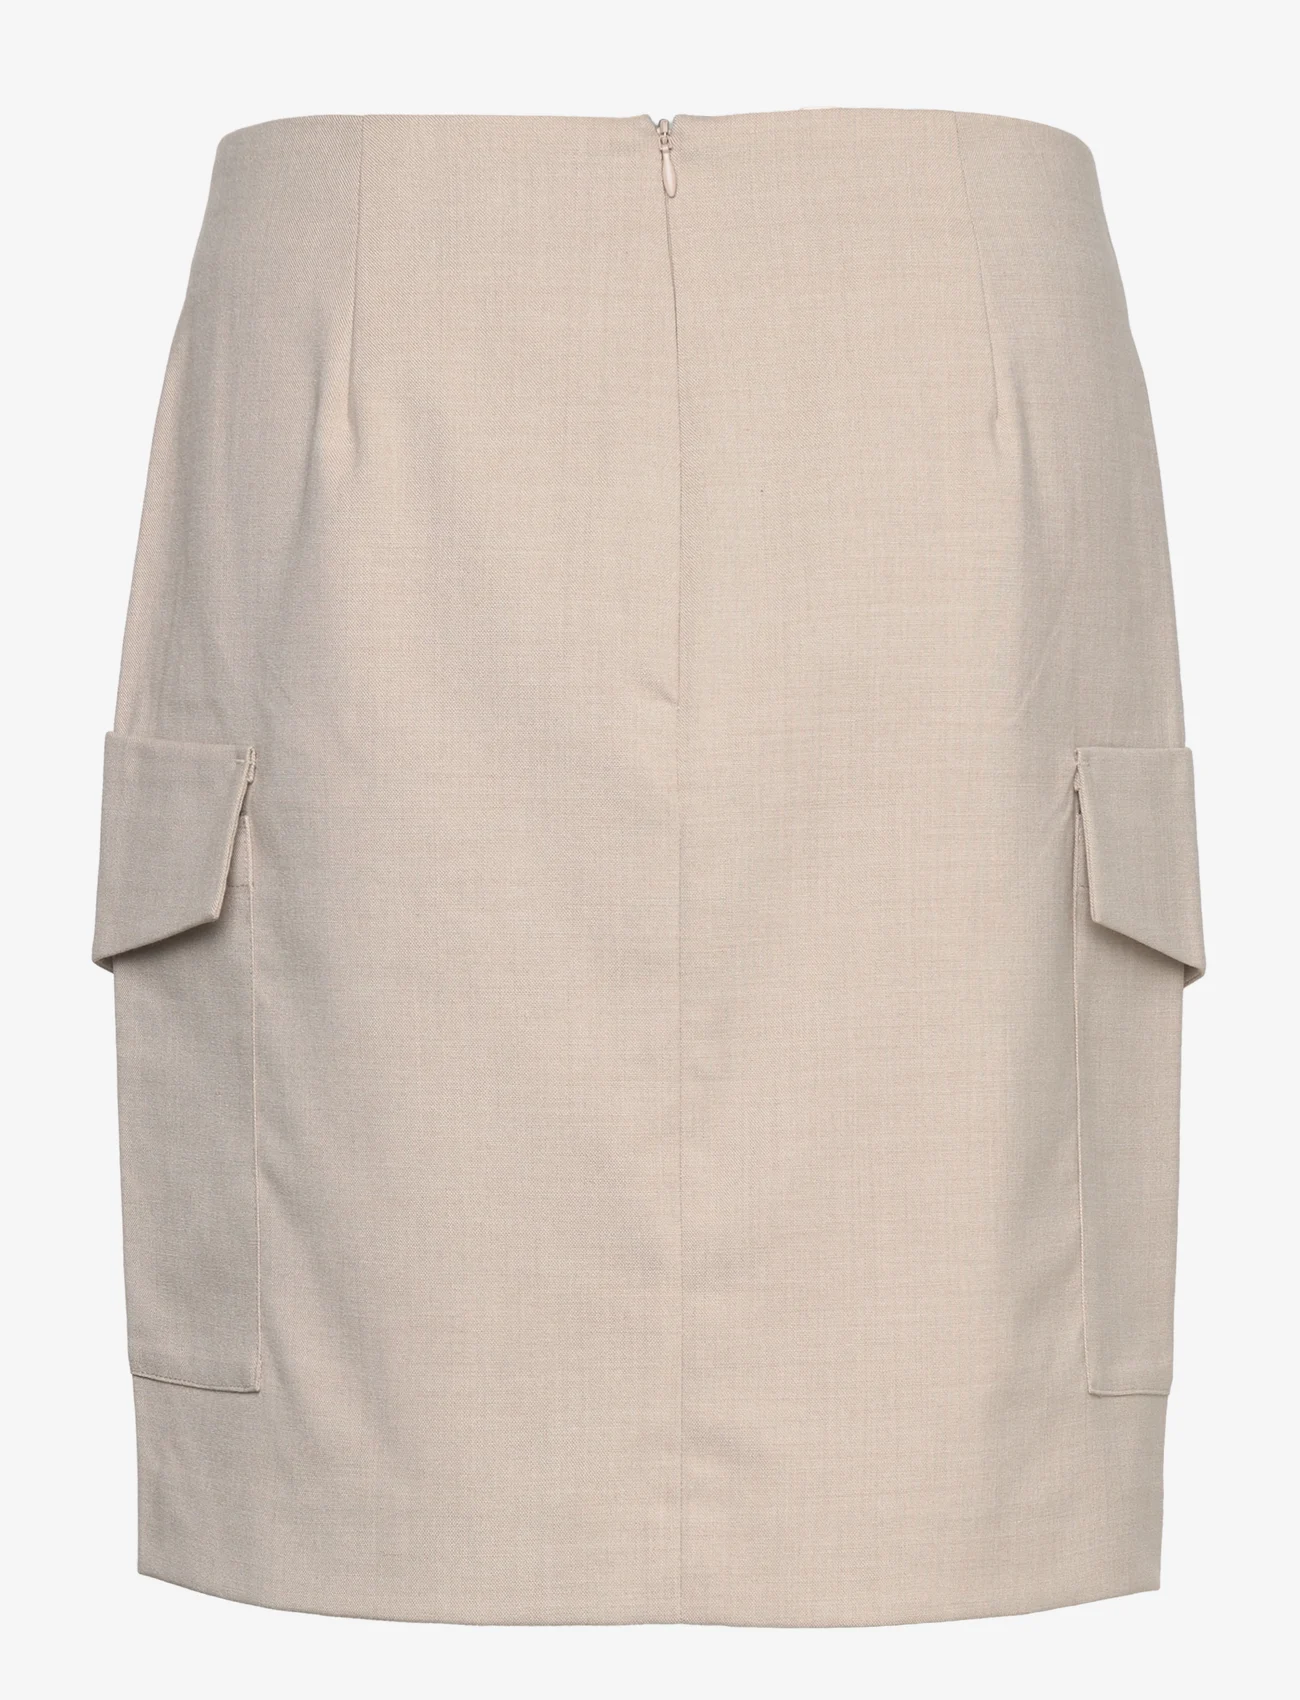 InWear - WaiIW Skirt - kurze röcke - mocha grey melange - 1